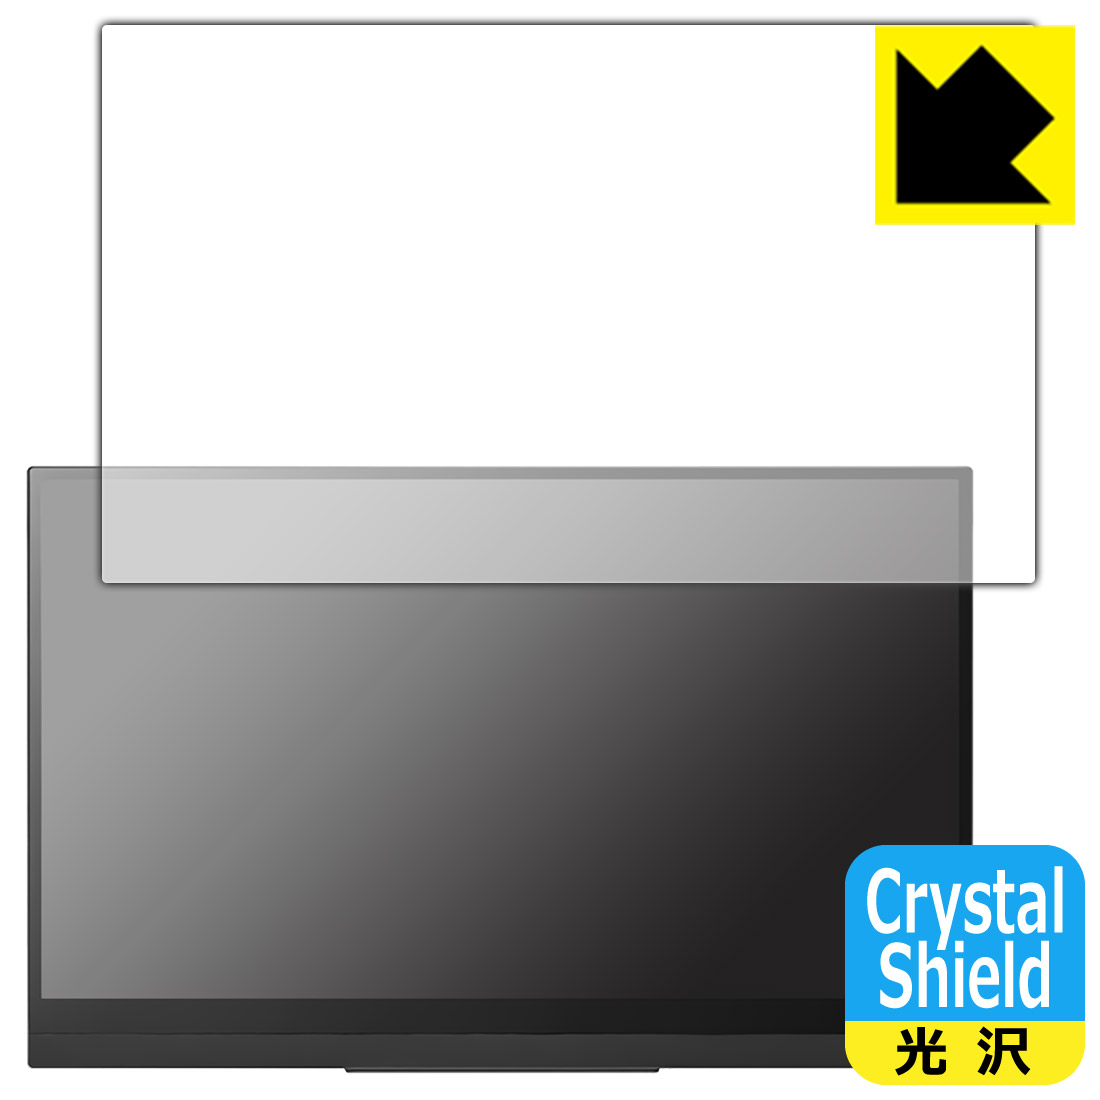 Crystal ShieldyzیtB PRINCETON UP-M156THD (3Zbg) { А